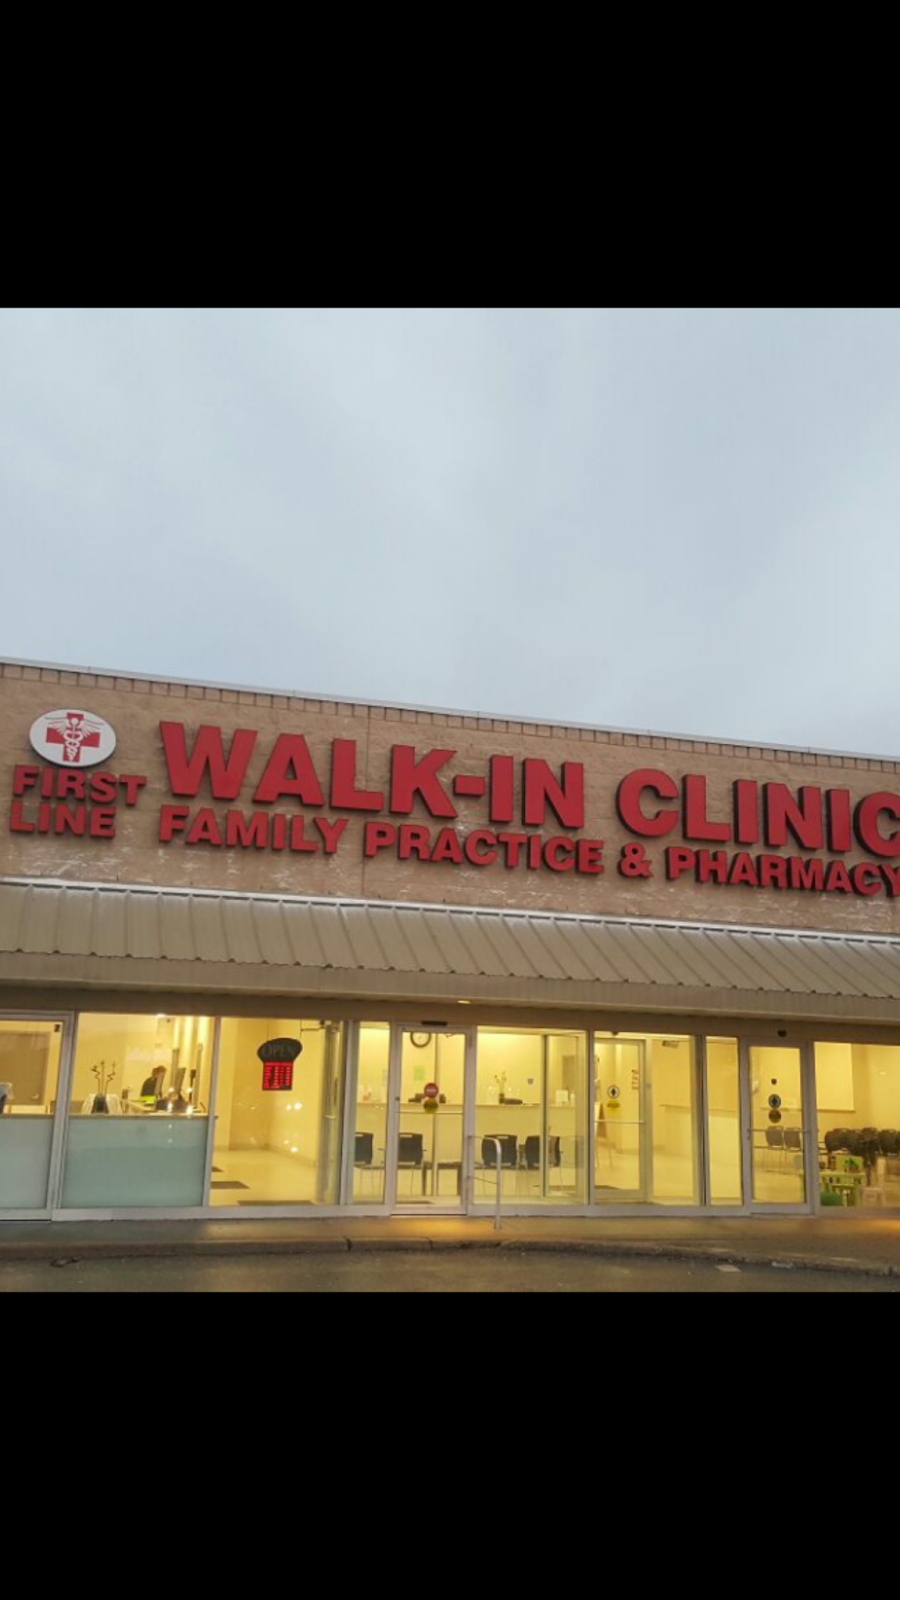 Firstline Walk-In Clinic & Pharmacy | 20B- (Next to Goodlife), 600 Hespeler Rd, Cambridge, ON N1R 8H2, Canada | Phone: (519) 267-2588